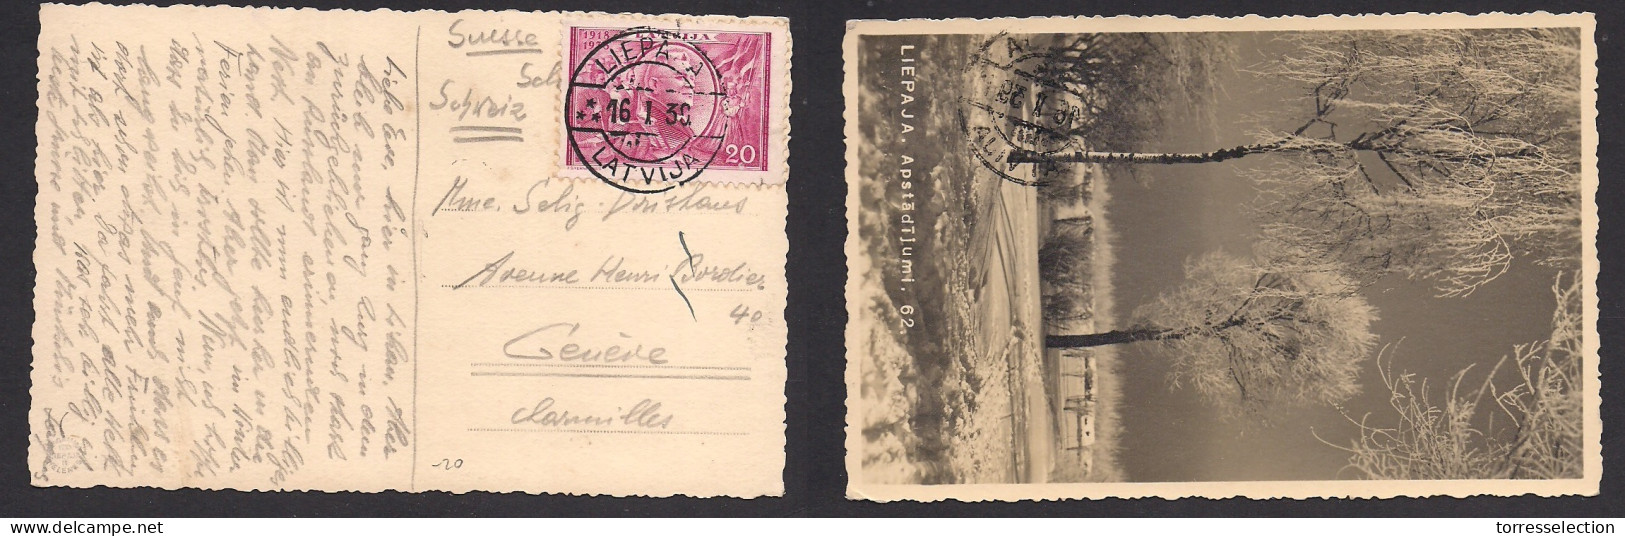 LATVIA. 1939 (16 Jan) Liepaja - Switzerland, Geneve. Single 20c Violet Fkd Ppc. Fine. - Lettland